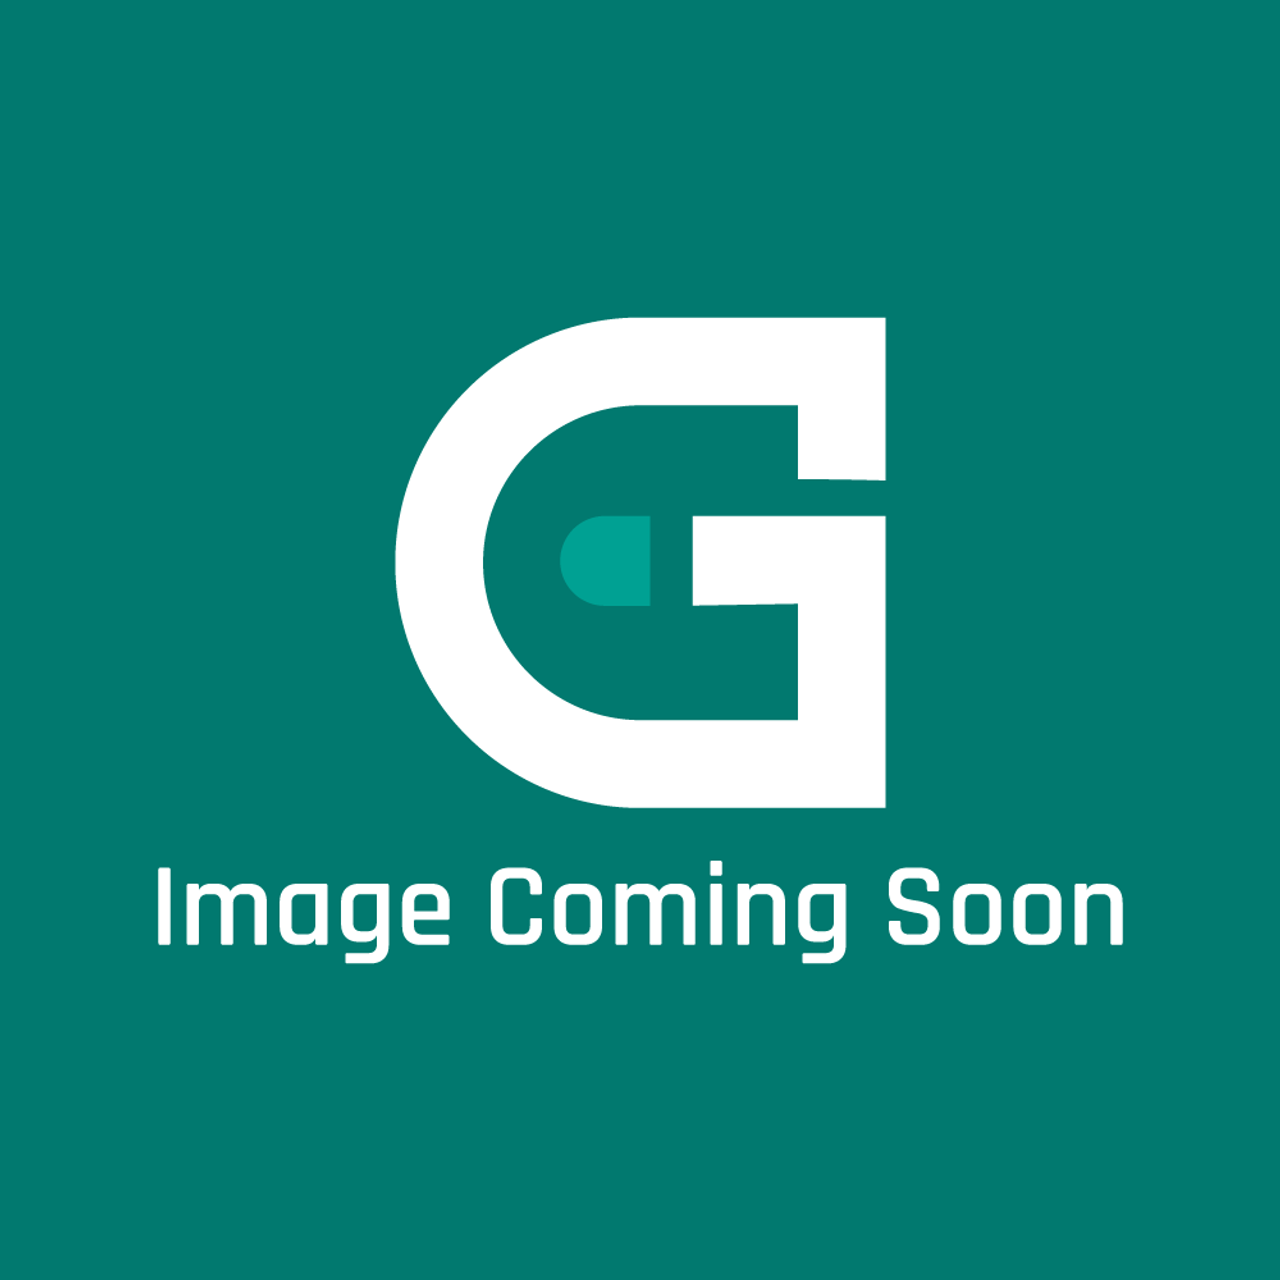 Garland 4602824 - Cfa Lower Grate Pivot Bu Shing - Image Coming Soon!